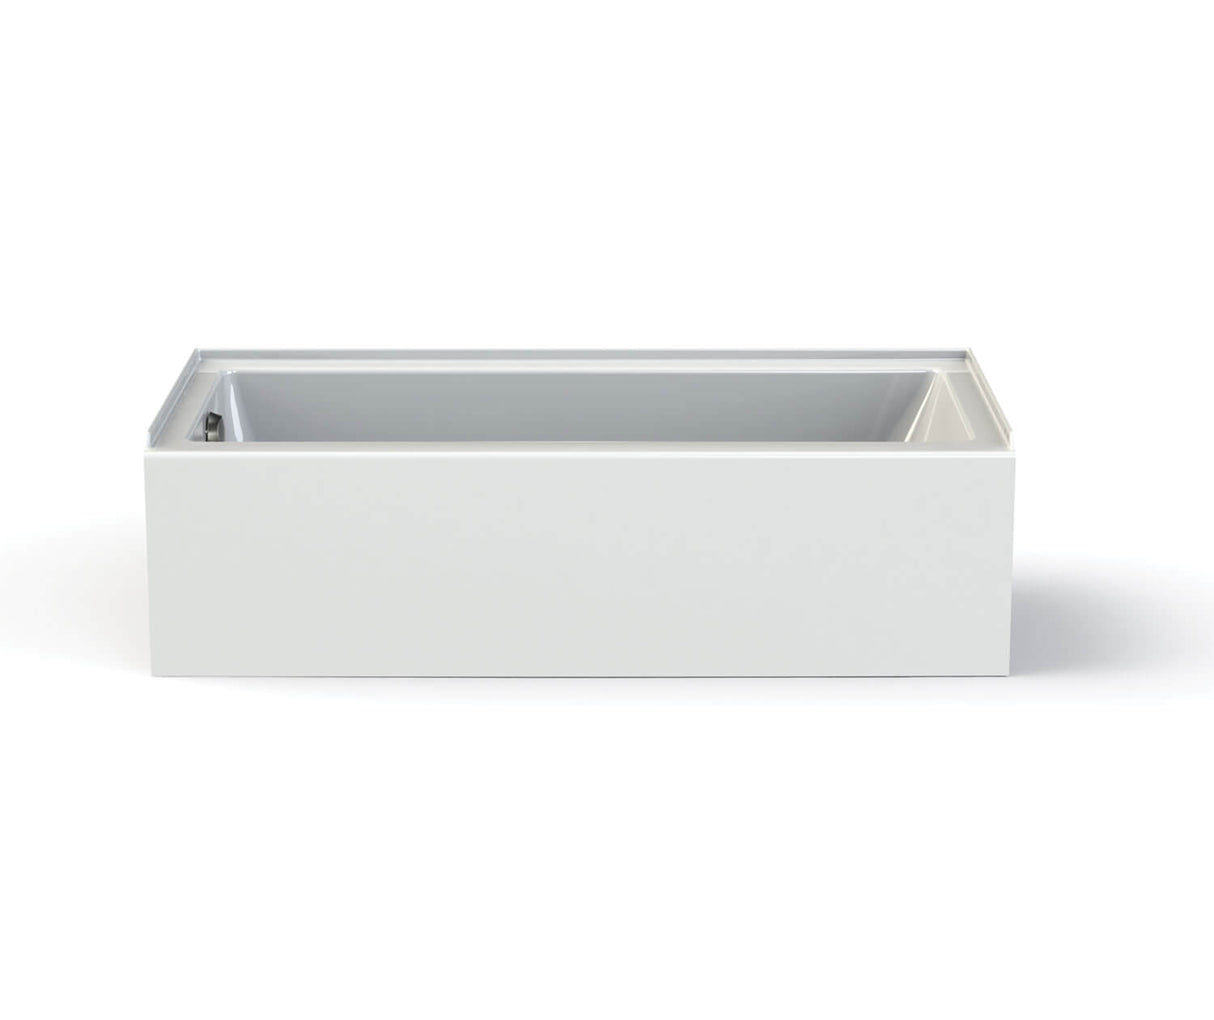 MAAX 106349-000-001-101 Rubix Access 6030 AFR Acrylic Alcove Right-Hand Drain Bathtub in White